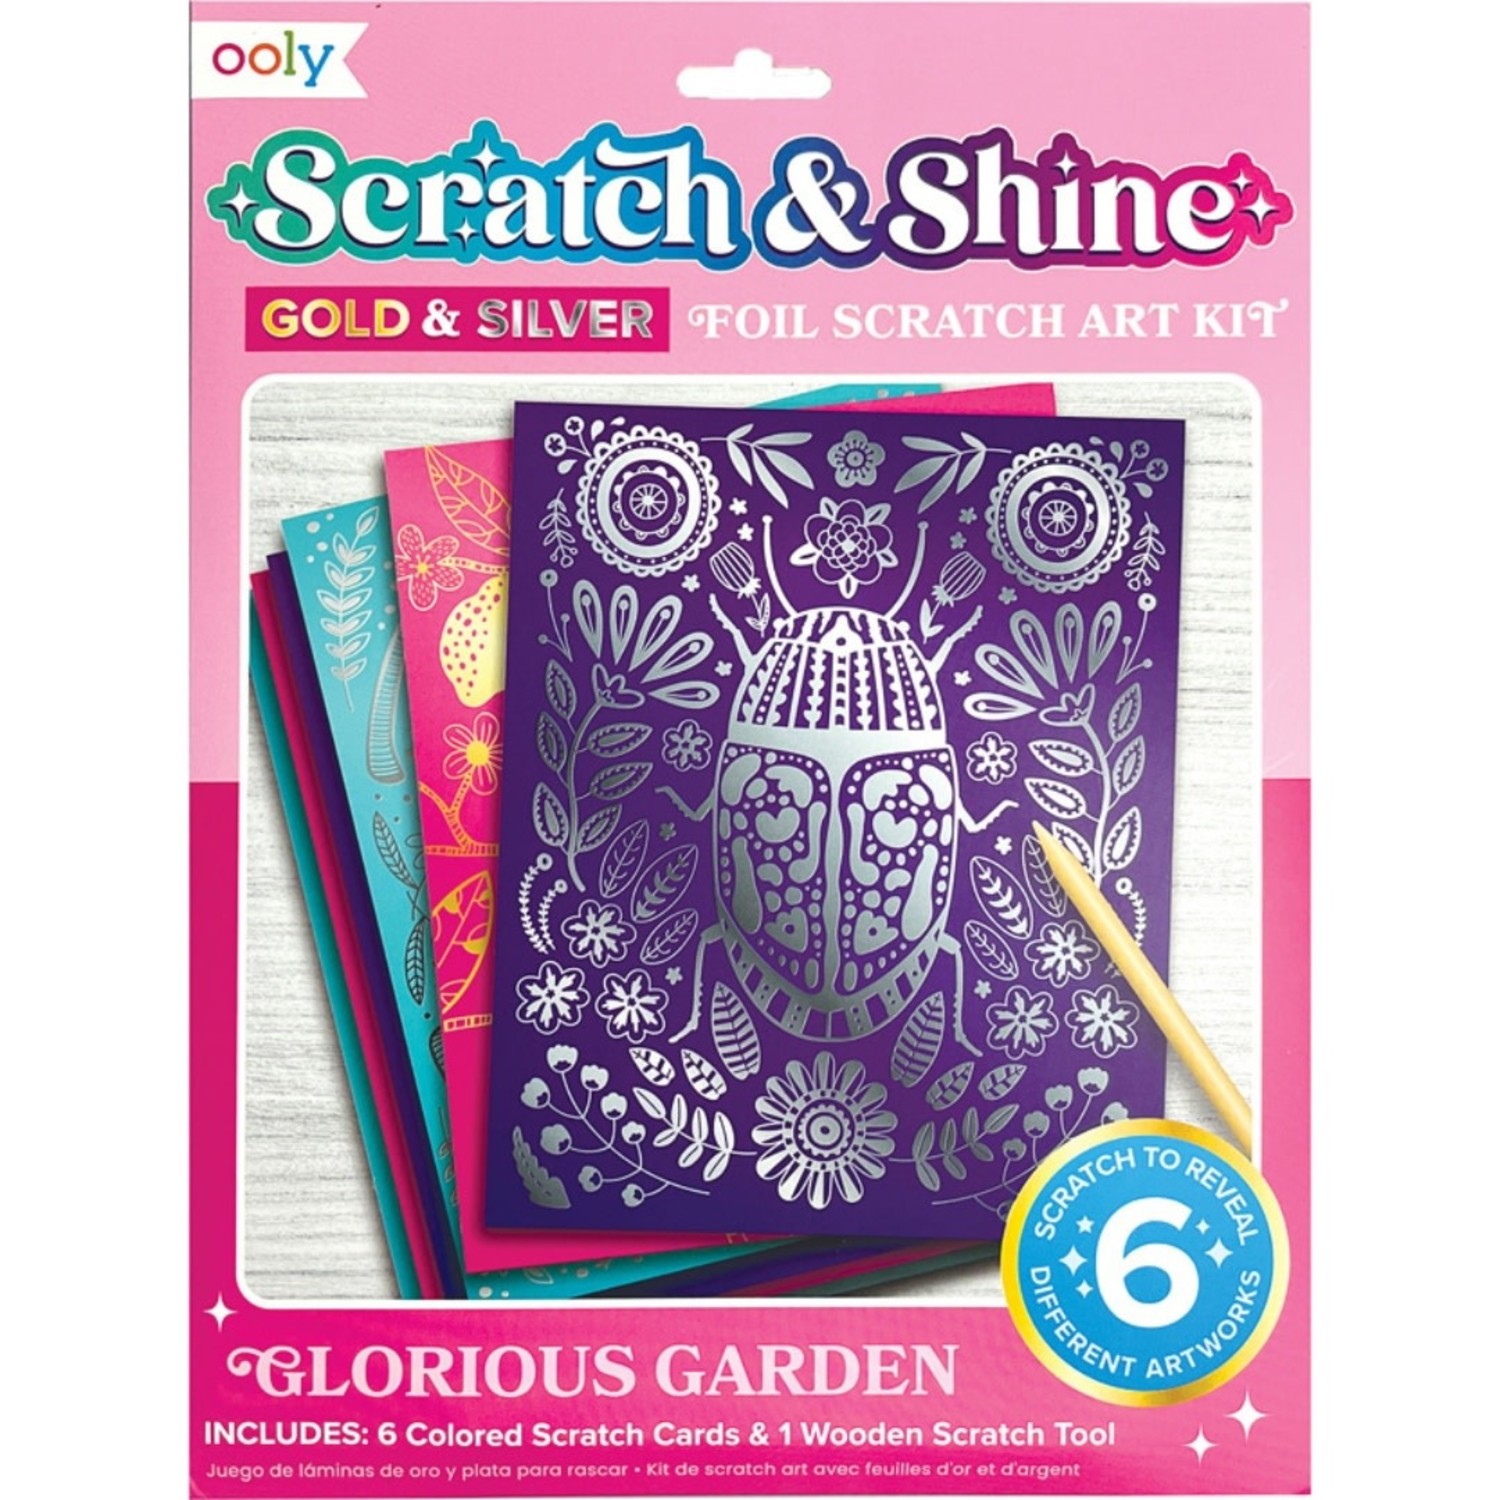 Ooly Glorious Garden Scratch & Shine Foil Art Kit